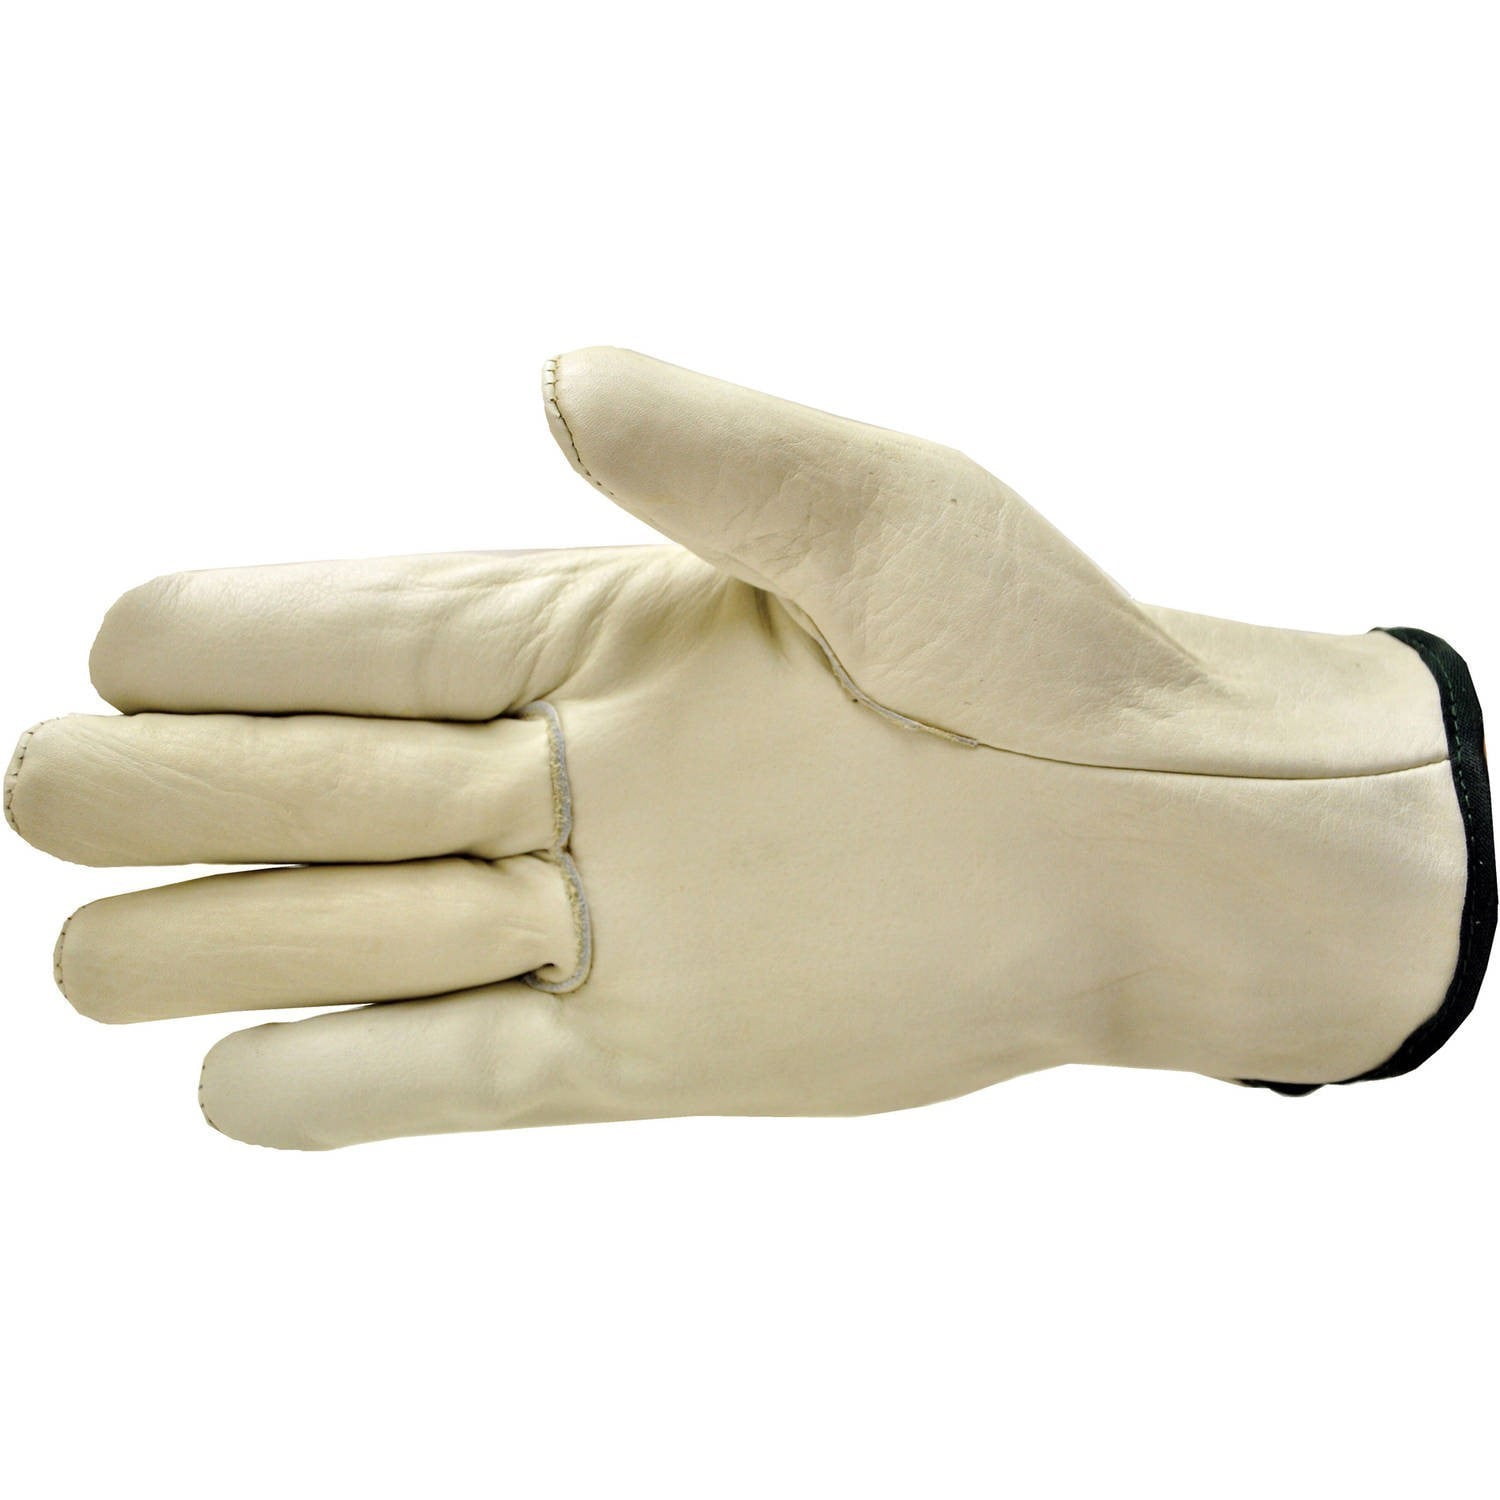 Ironclad Box Handler Gloves, Black, Large, Pair -IRNBHG04L